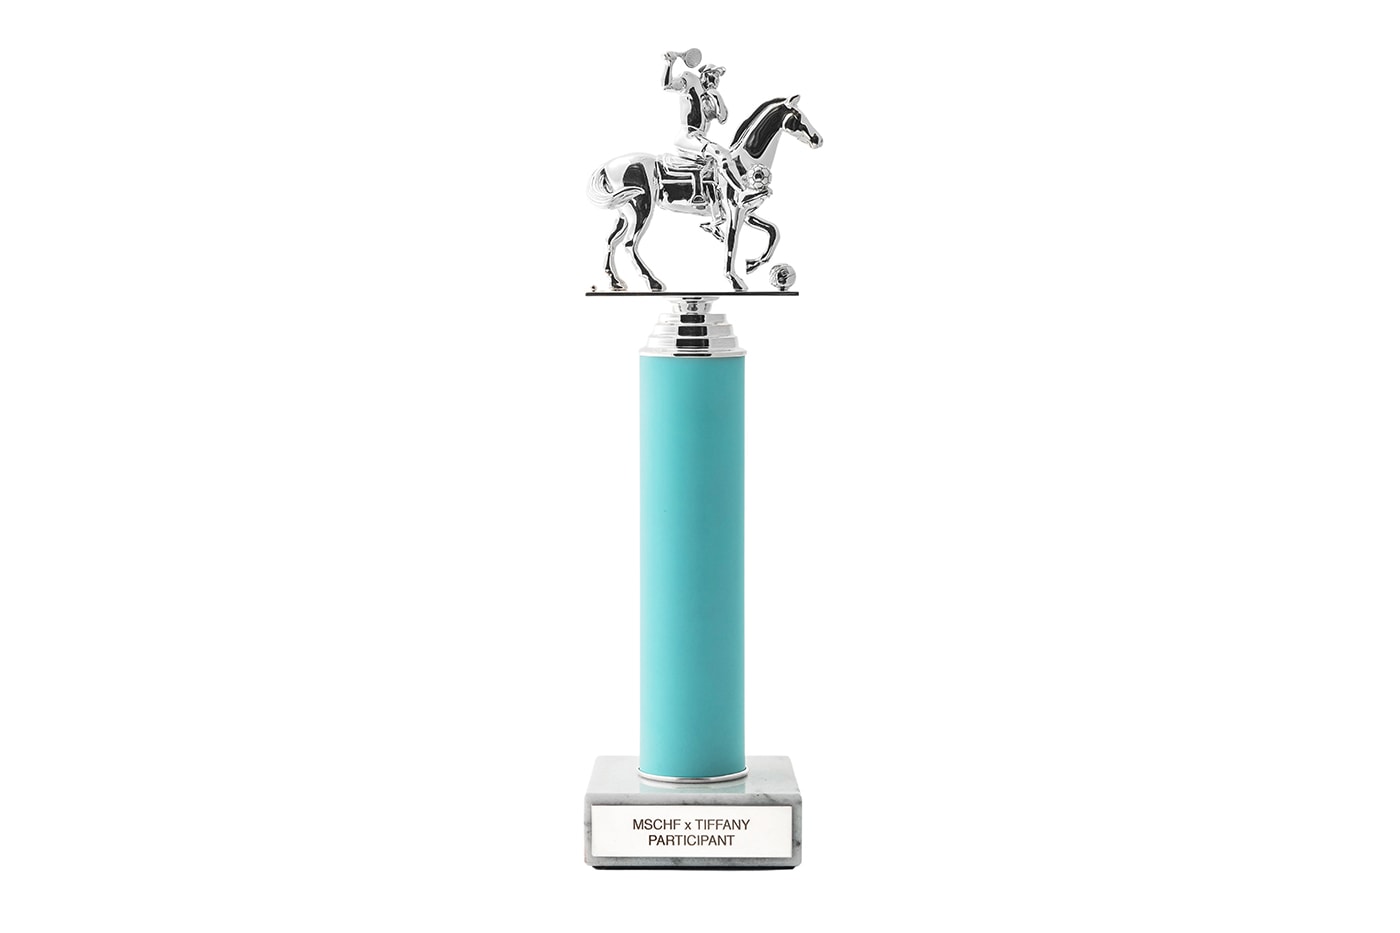 MSCHF 攜手 Tiffany & Co. 打造 Ultimate Participation Trophy 限量獎杯